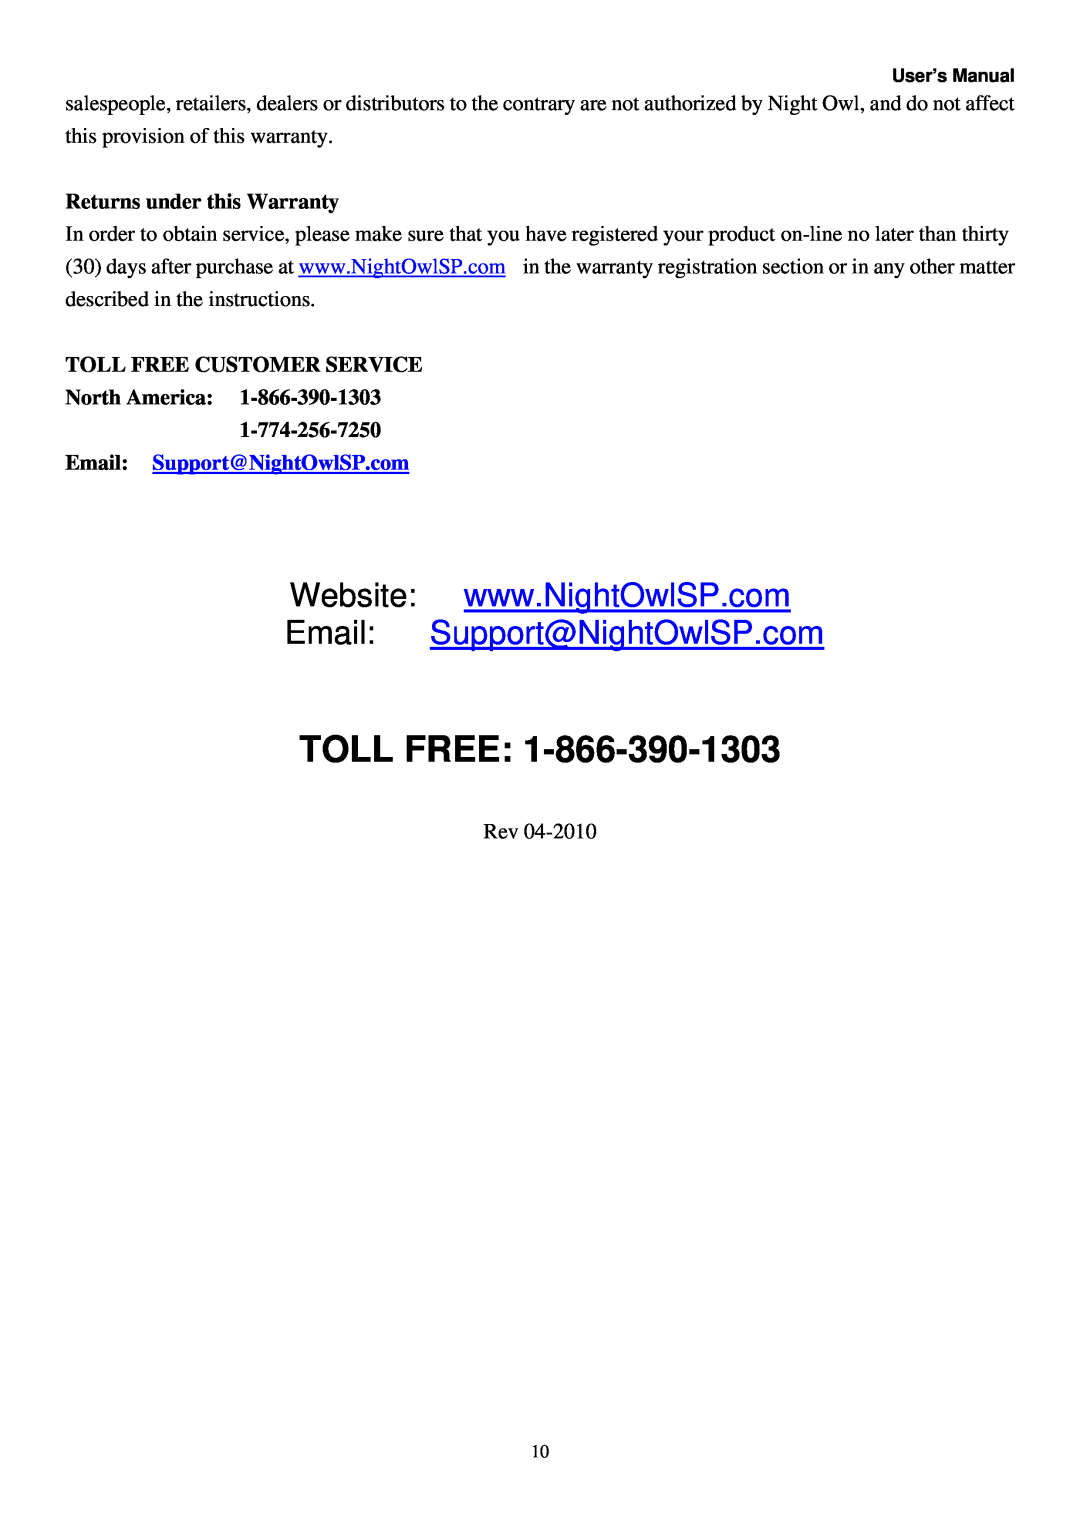 Night Owl Optics NO-8LCD manual Returns under this Warranty, TOLL FREE CUSTOMER SERVICE North America, Toll Free 